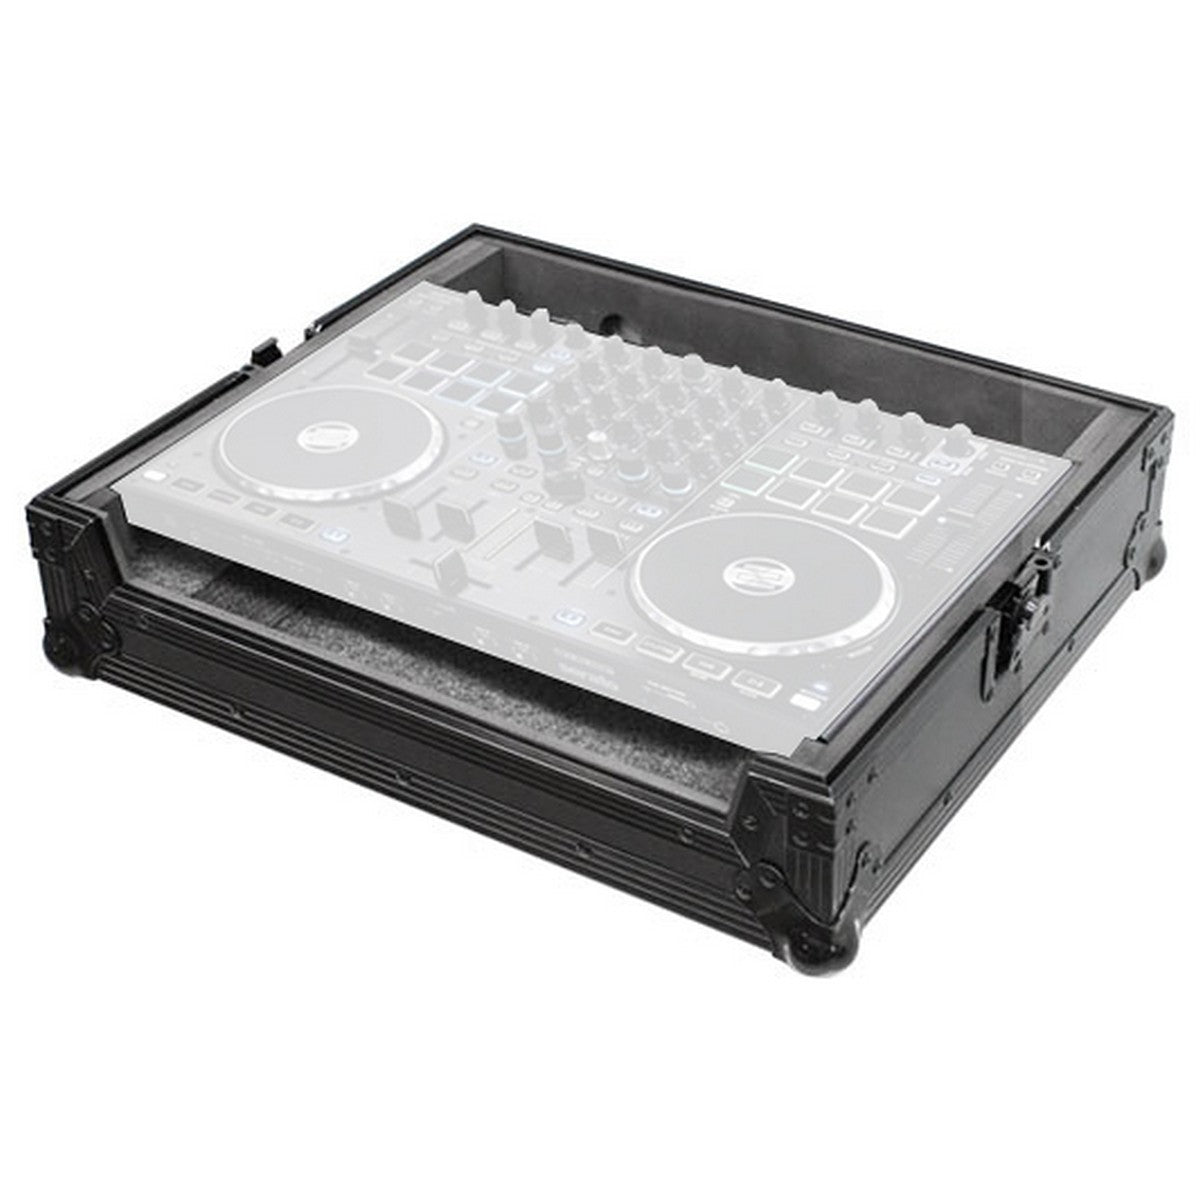 Odyssey Cases FZTERMIX8BL Reloop Terminal Mix 8 Serato DJ Controller Black Label Case (Used)